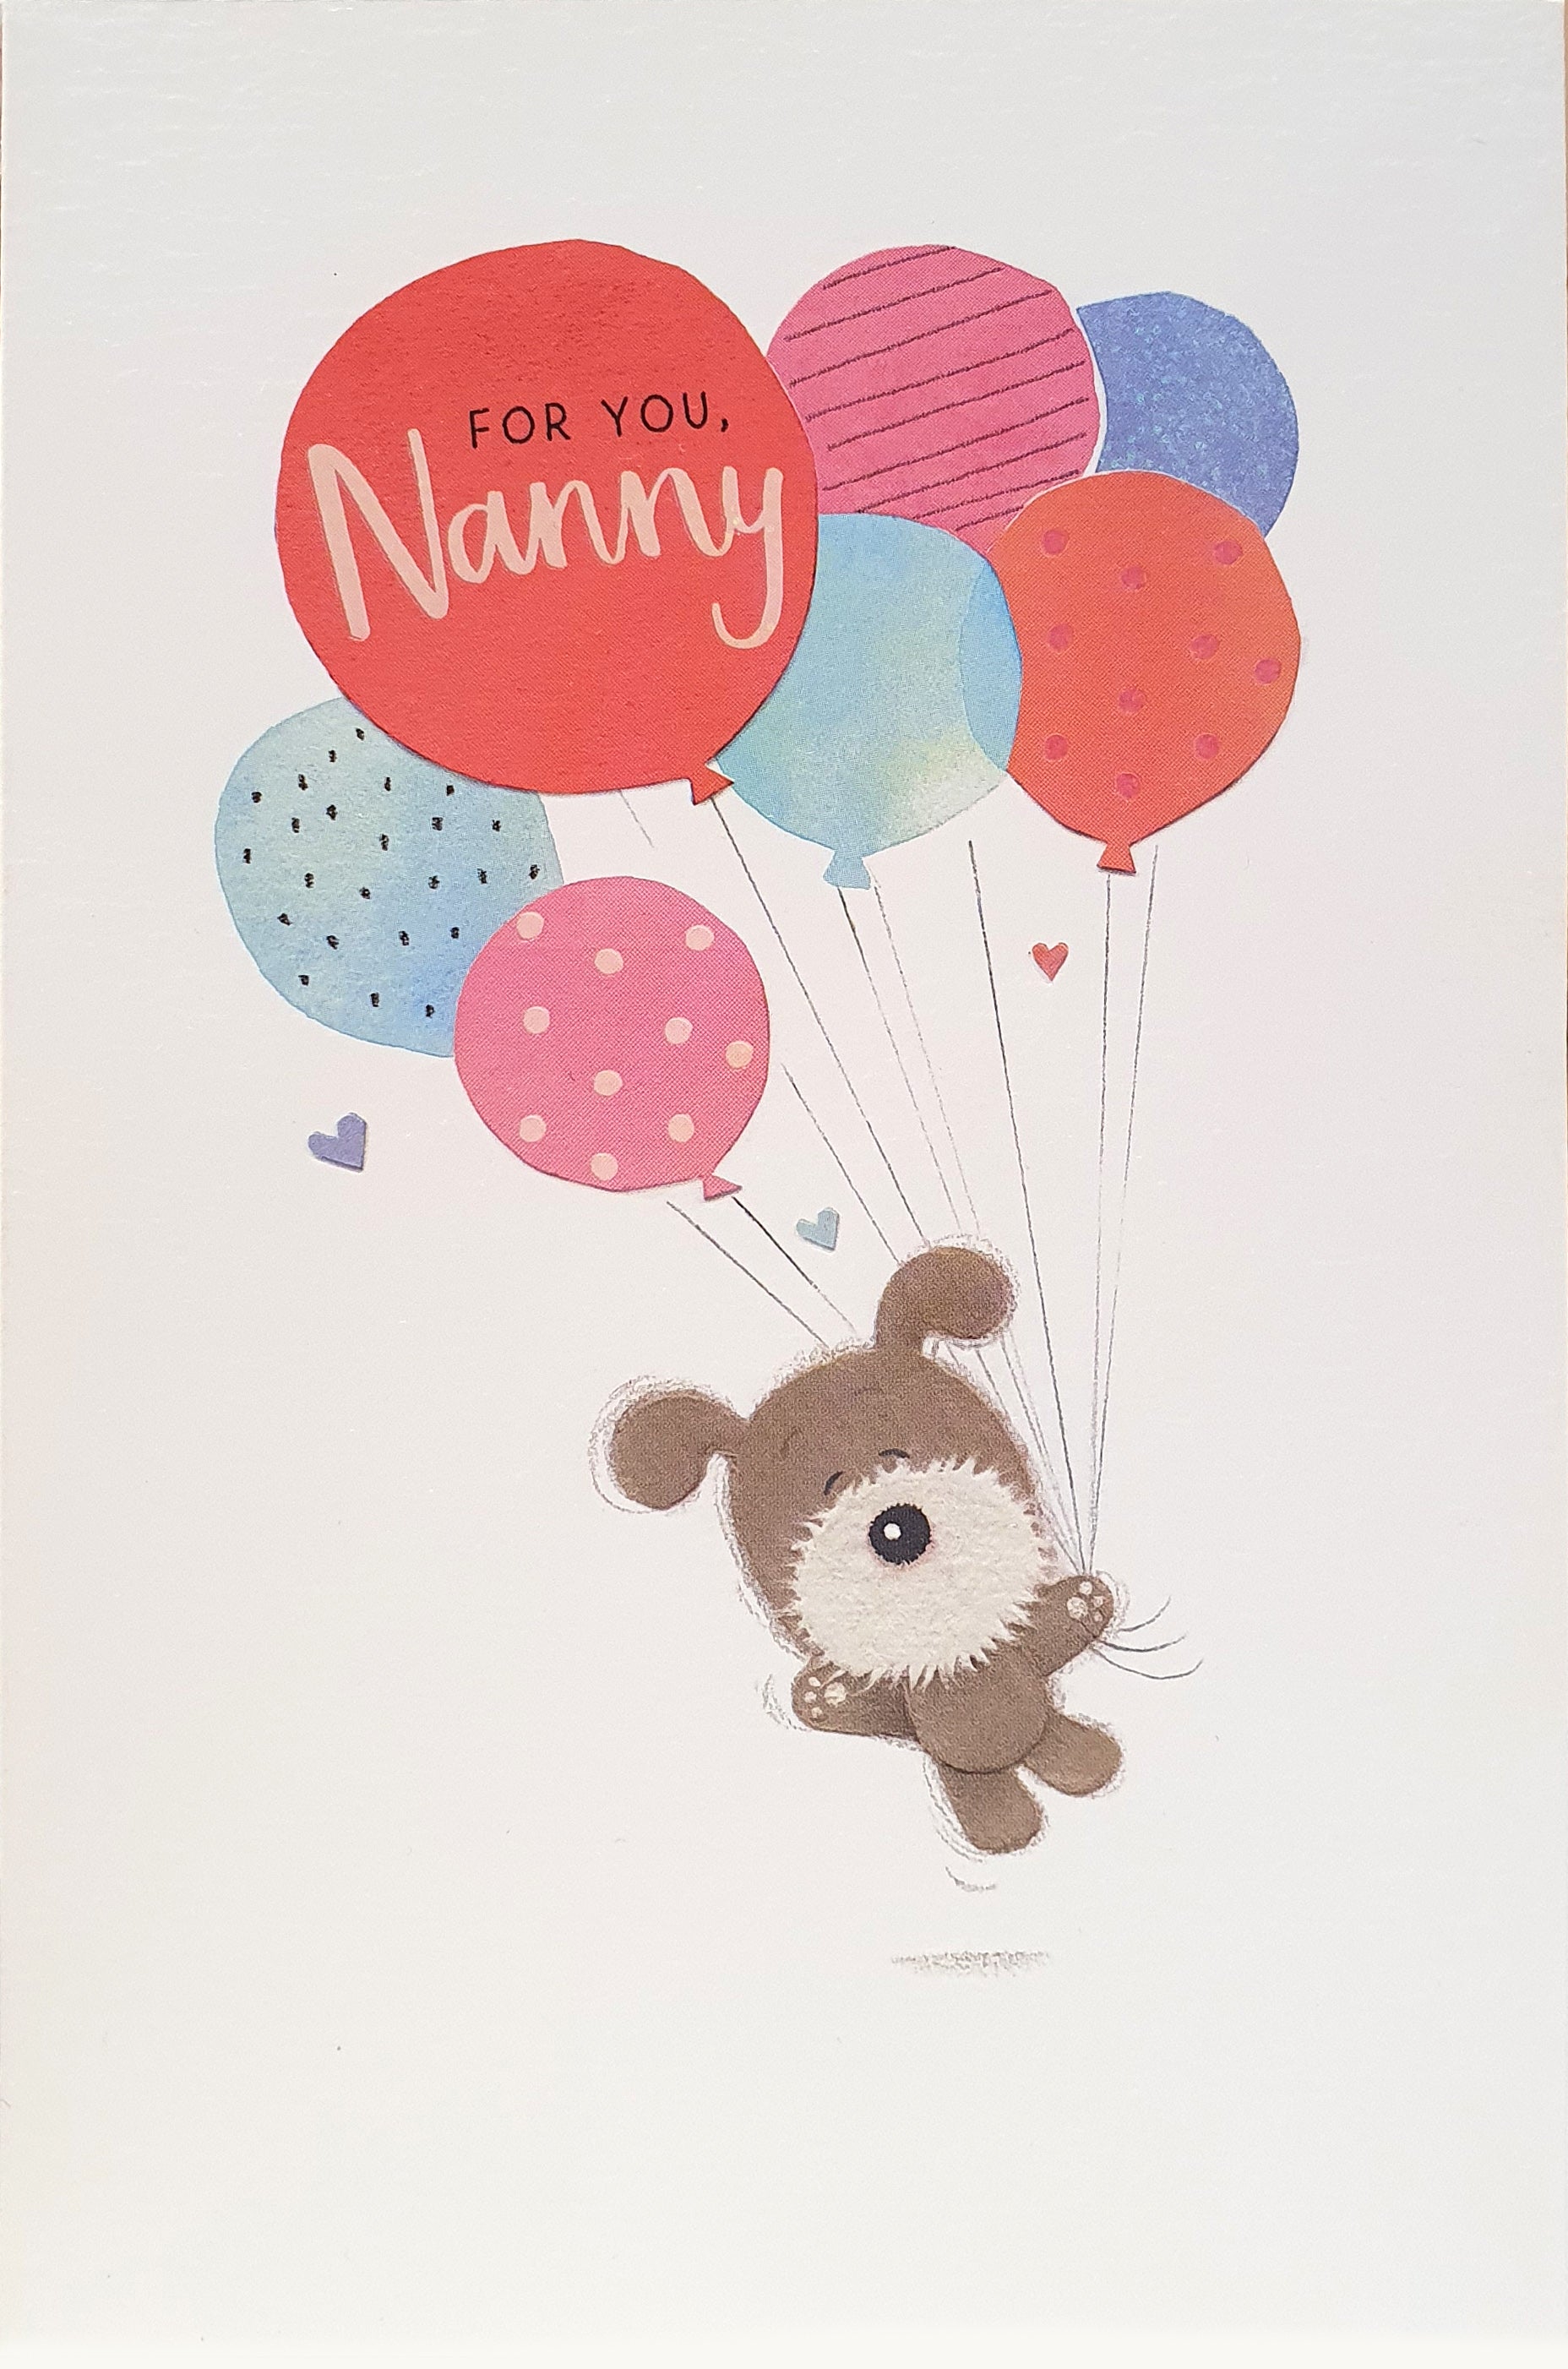 Nanny Birthday Card - Lts of Woof